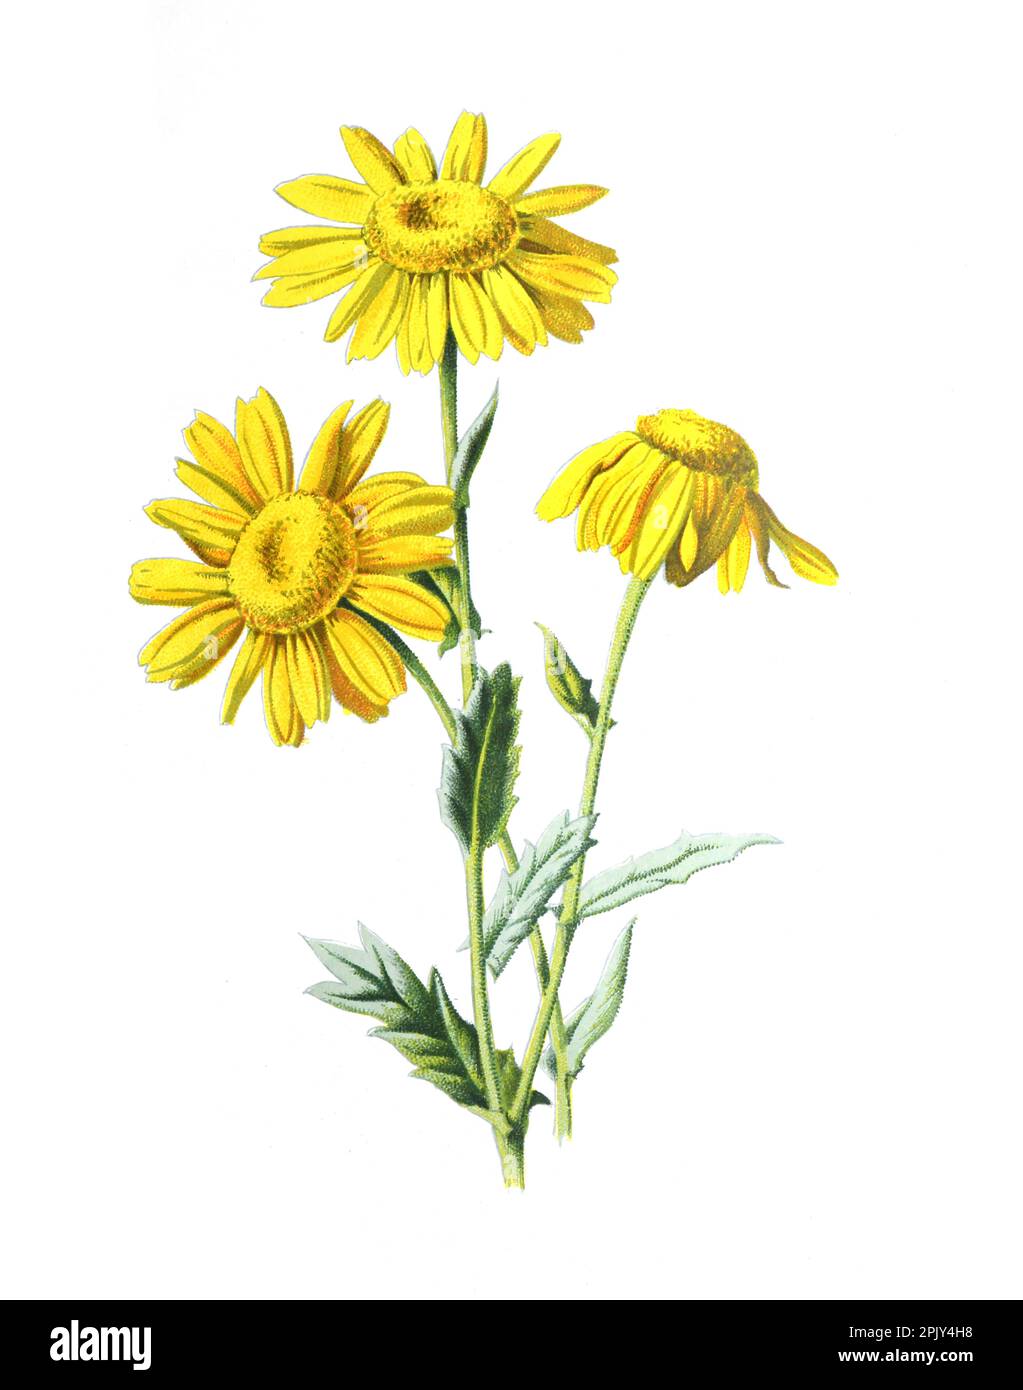 Corn marigold or Glebionis segetum or Chrysanthemum segetum flower. Vintage hand drawn wild field flowers illustration Stock Photo